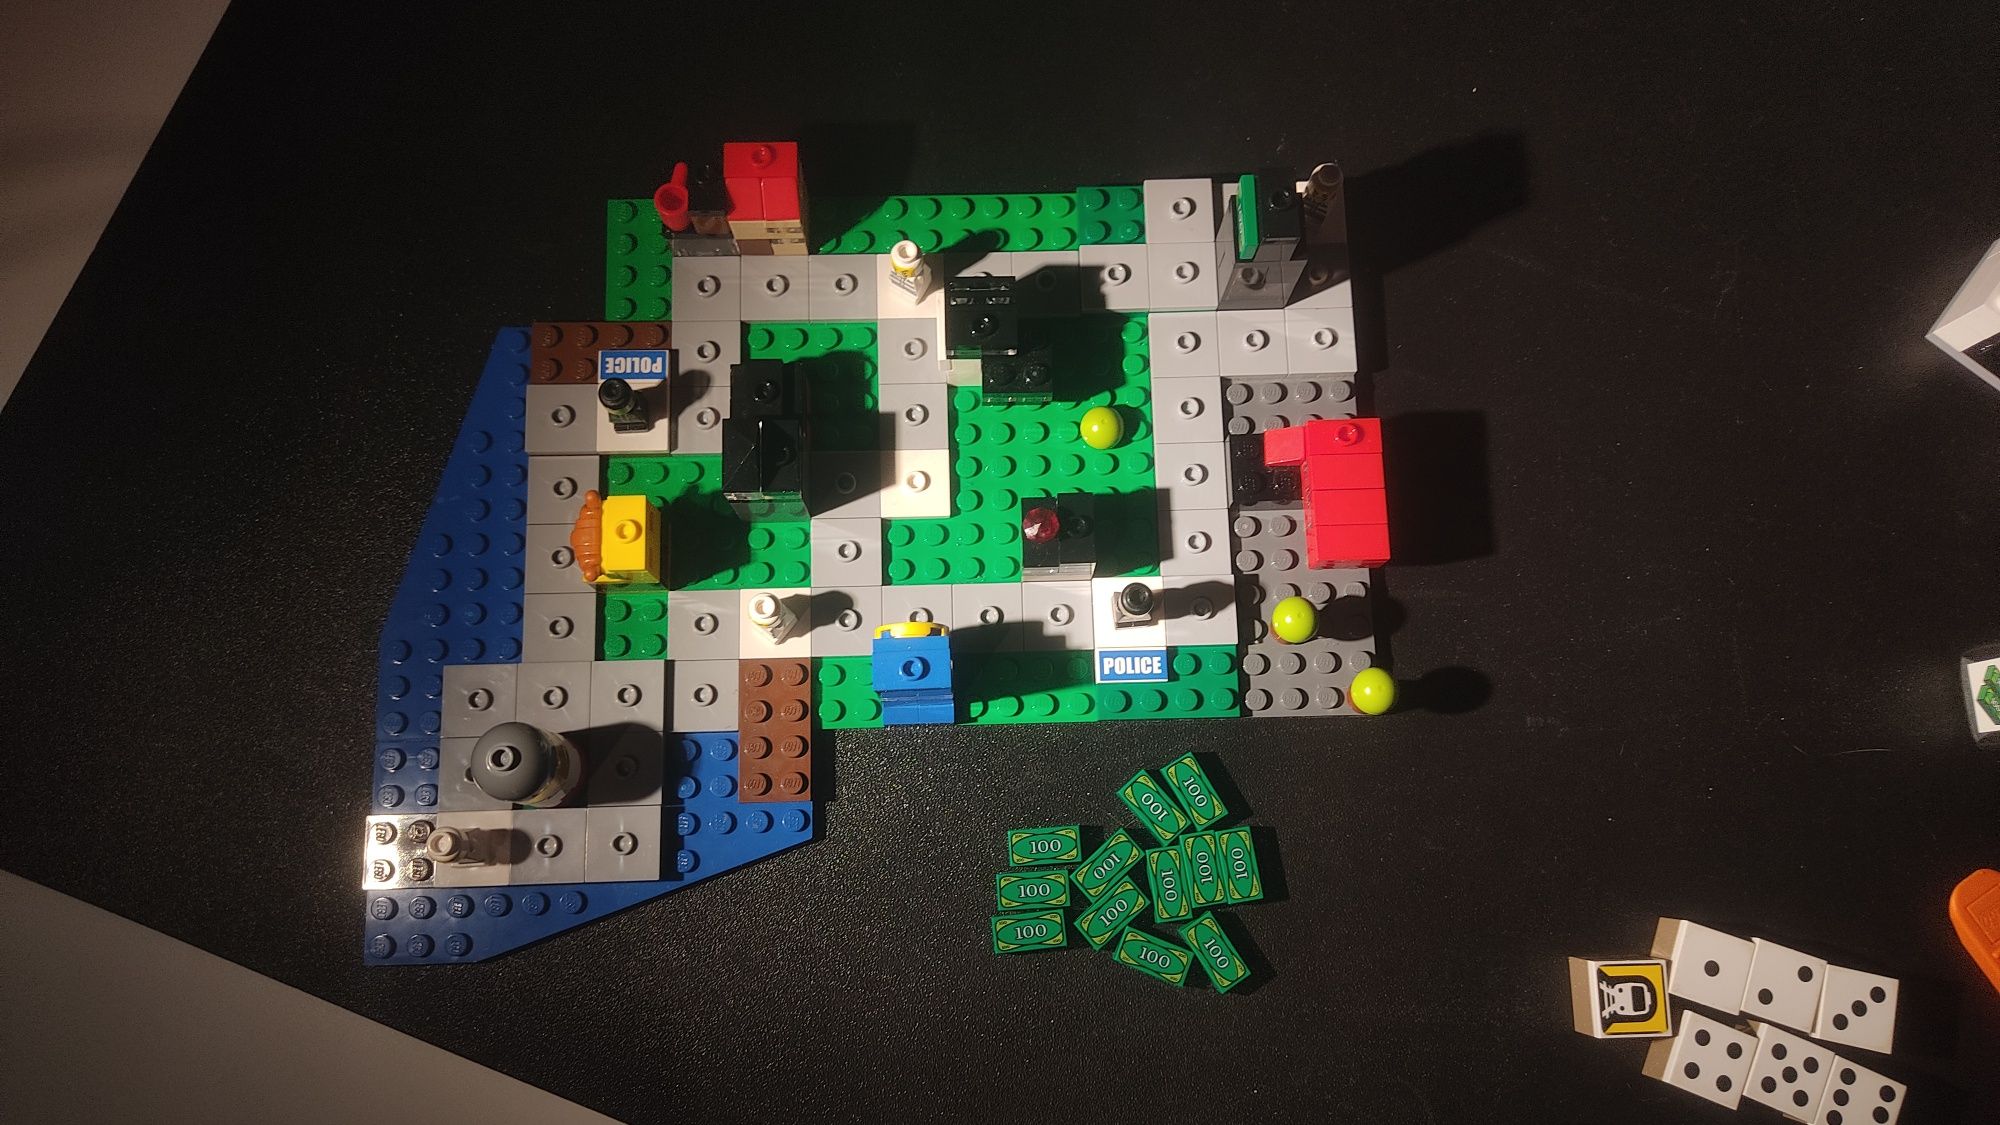 Jogo Lego City Alarm - 3865